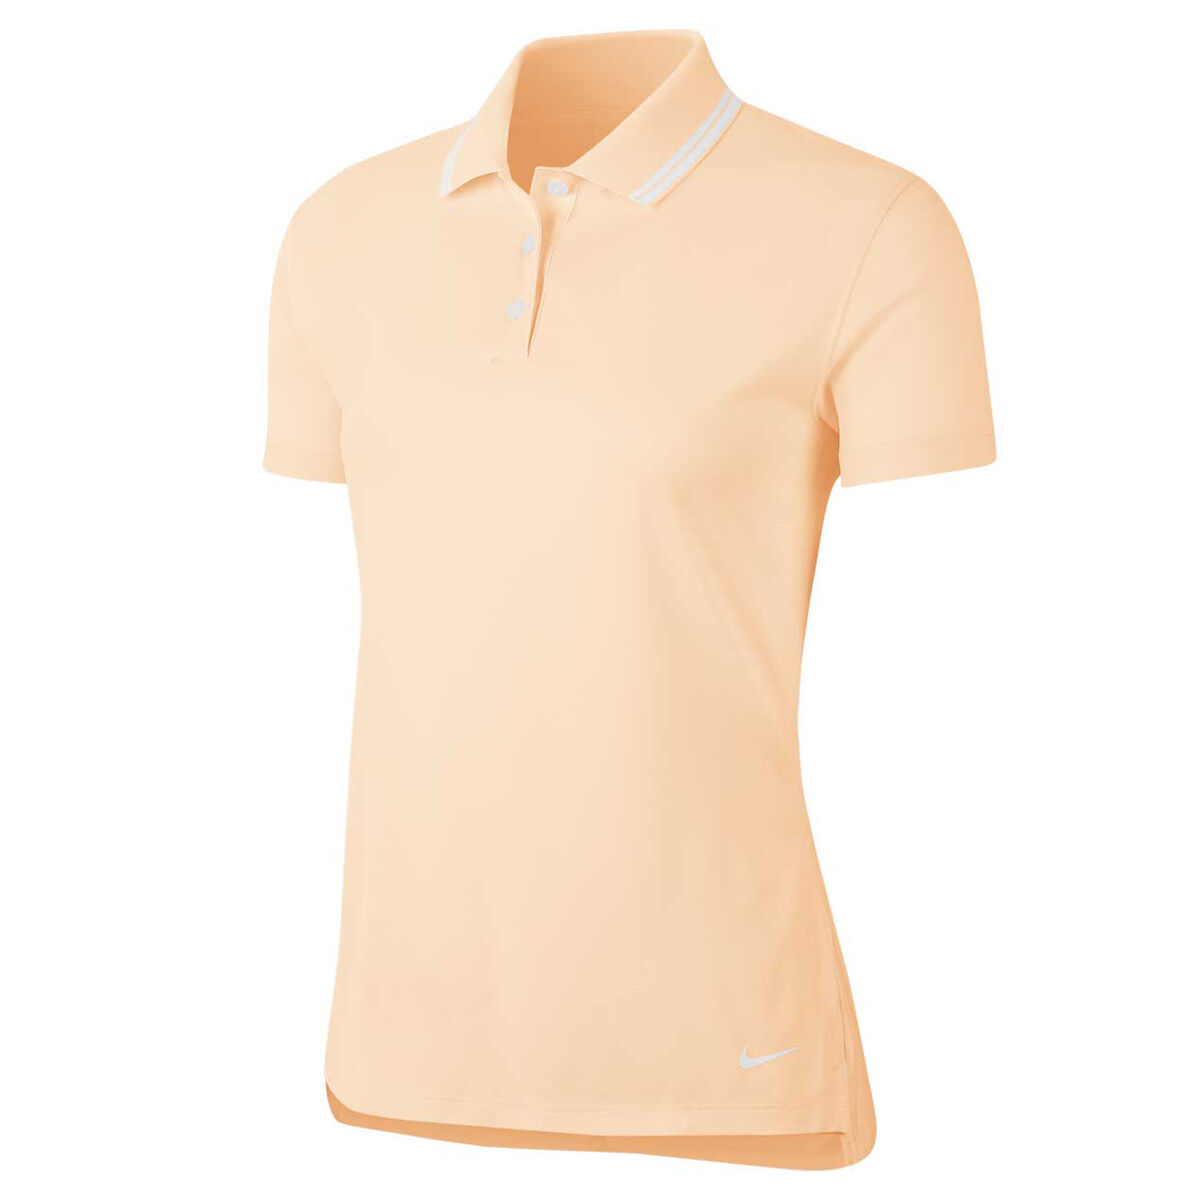 orange womens golf shirt